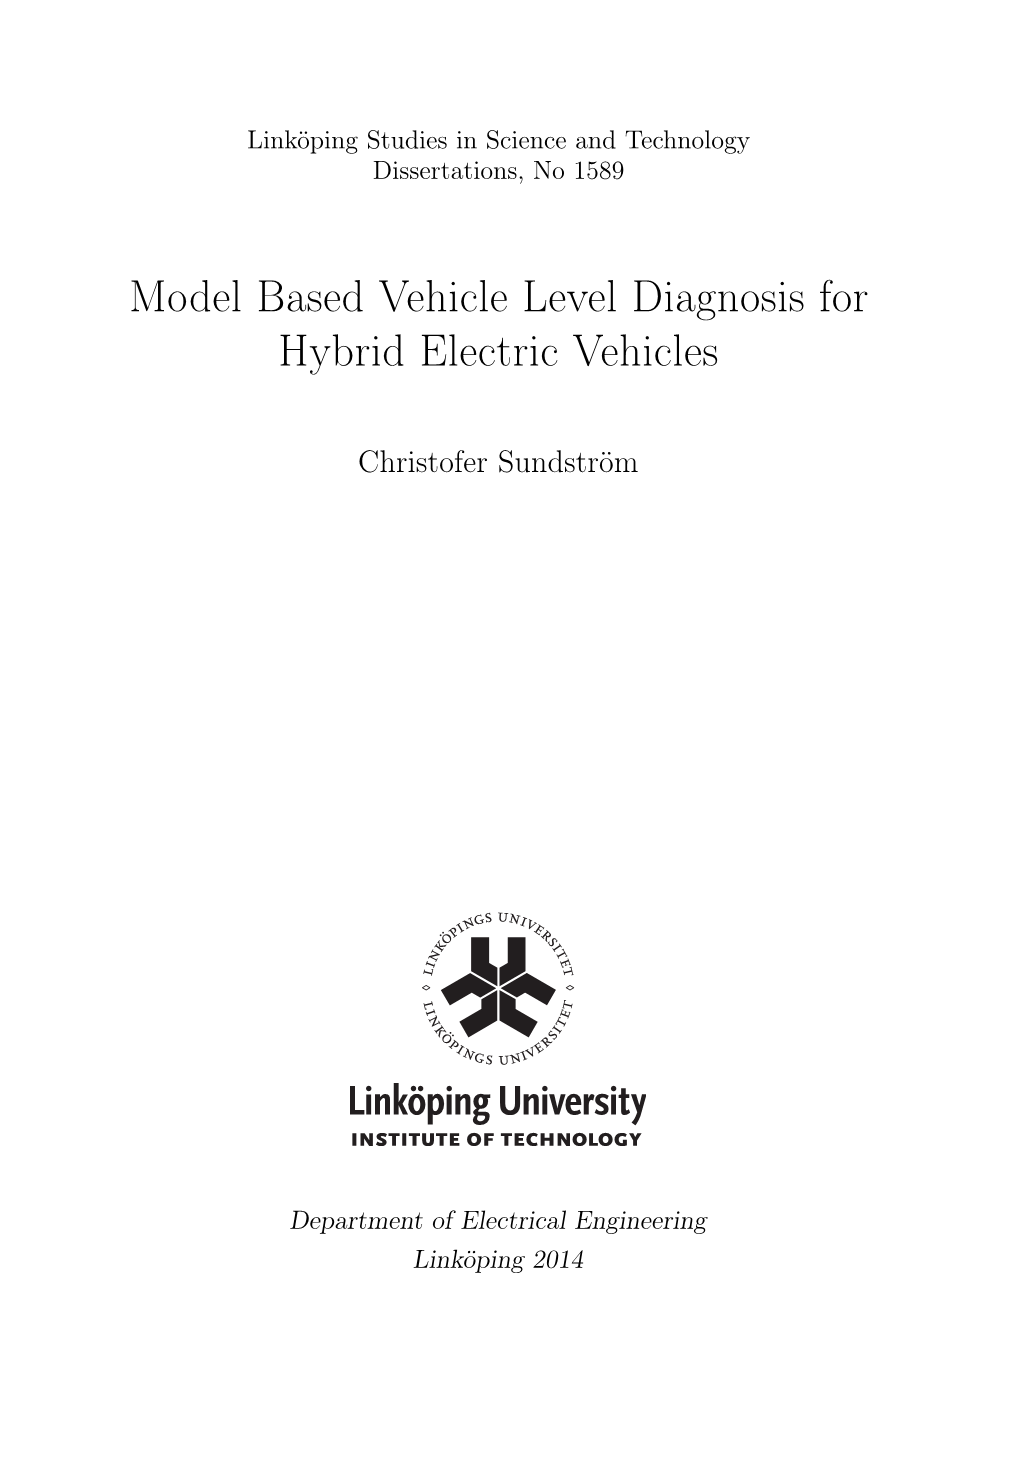 Model Based Vehicle Level Diagnosis for Hybrid Electric Vehicles